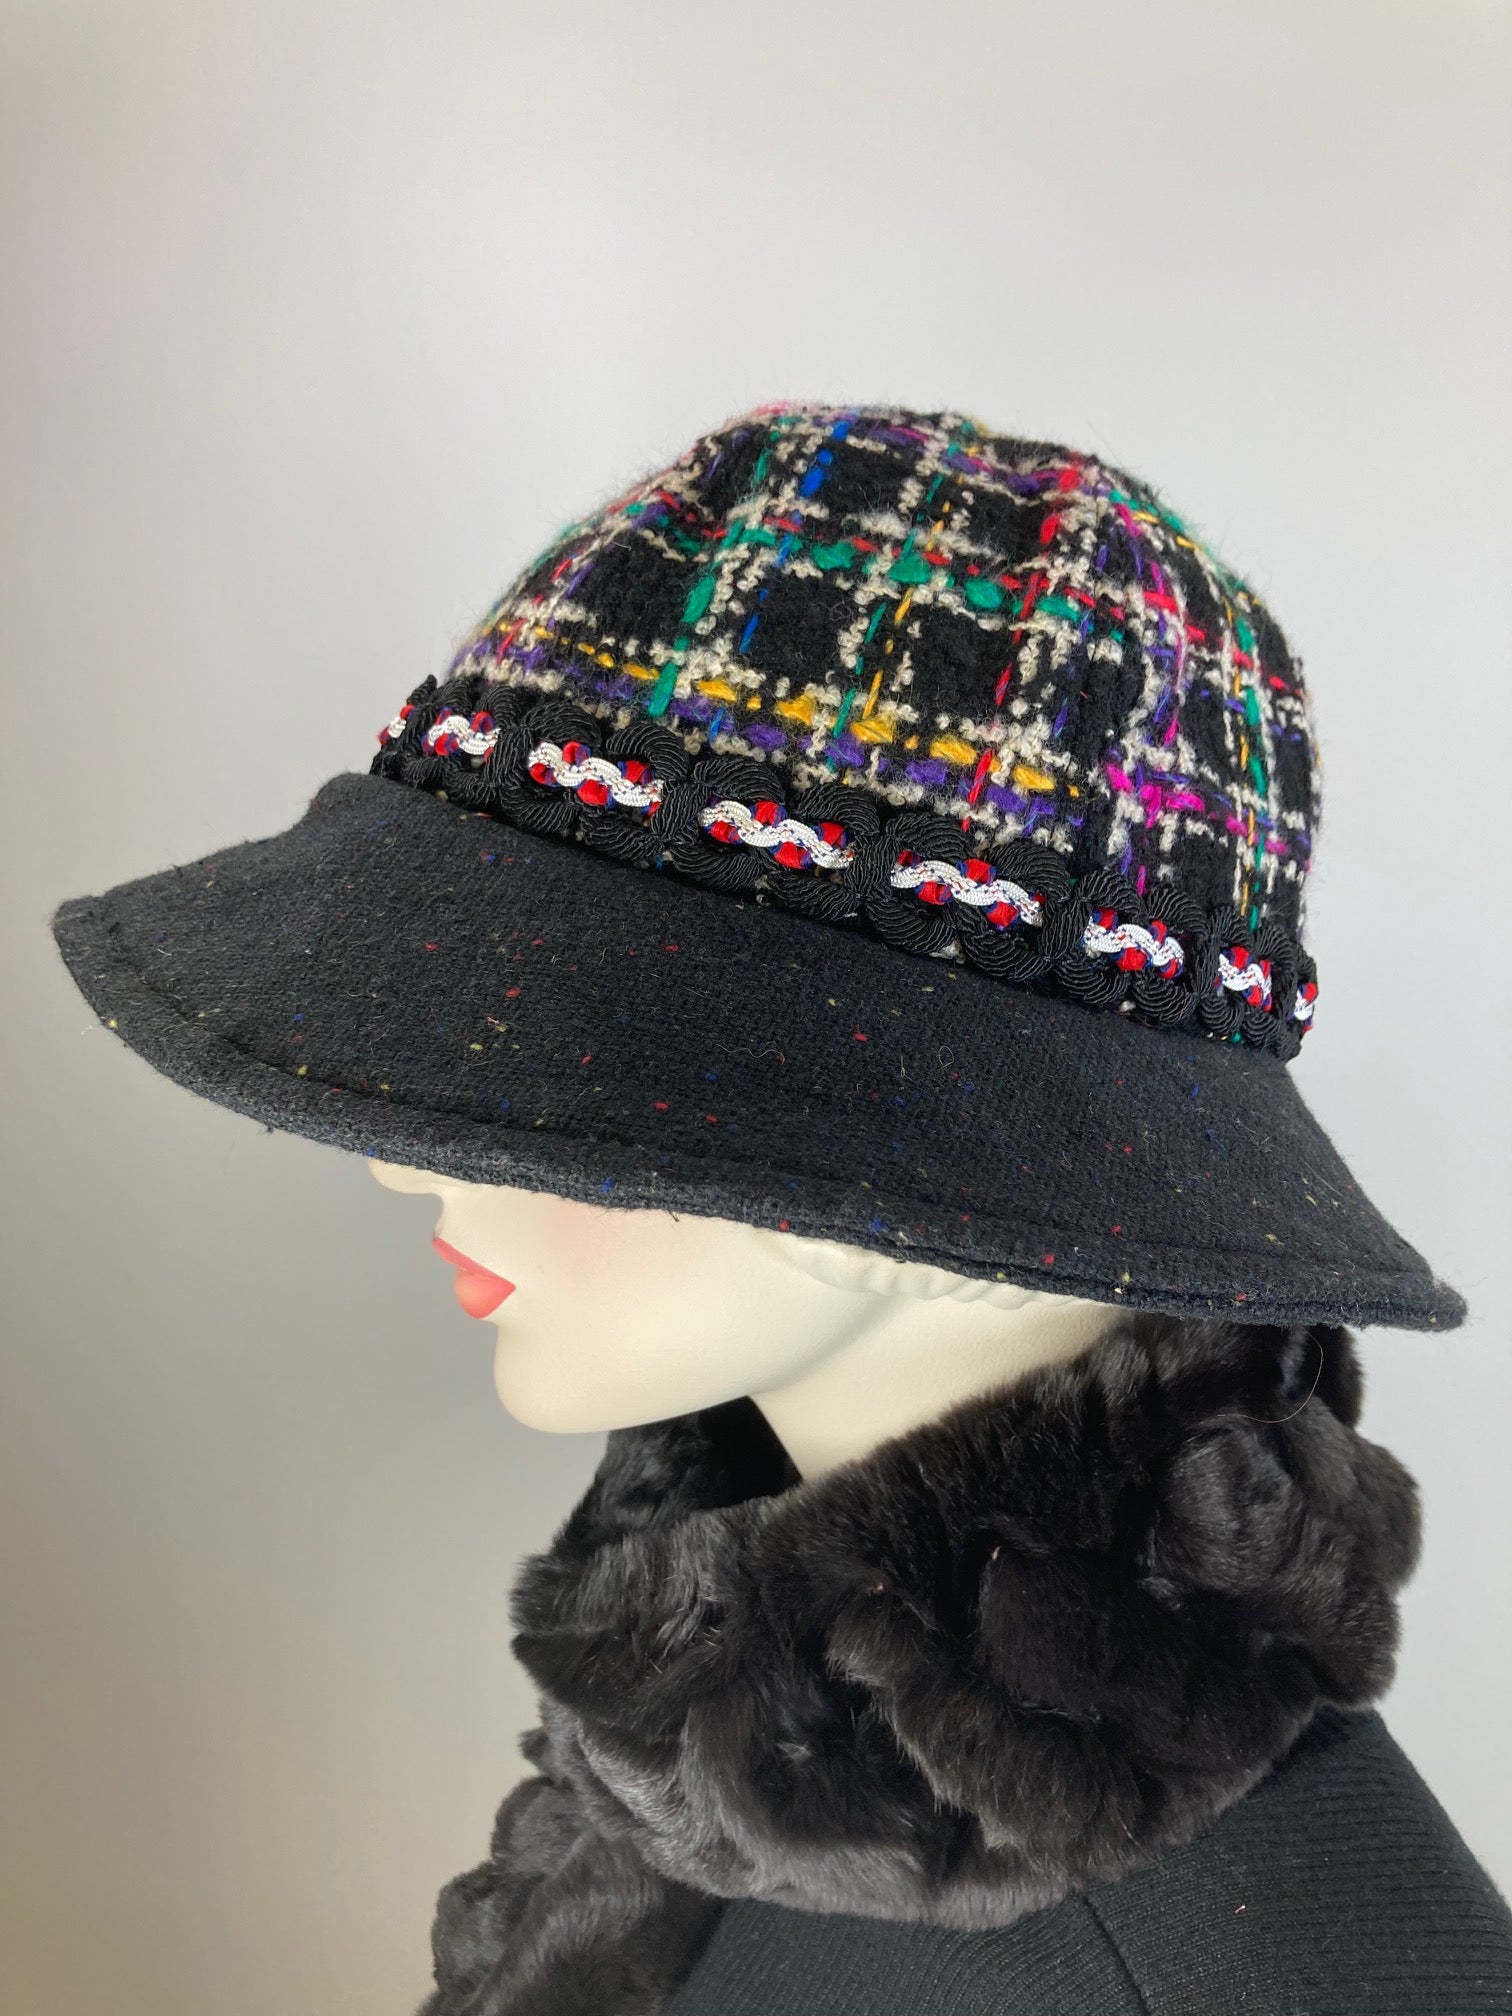 Colorful Black White Wool Cloche. Slow Fashion Hat. Womens Downton Abbey hat. Woven Wool Medium brim Ladies Miss Fisher cloche. Classic brim hat